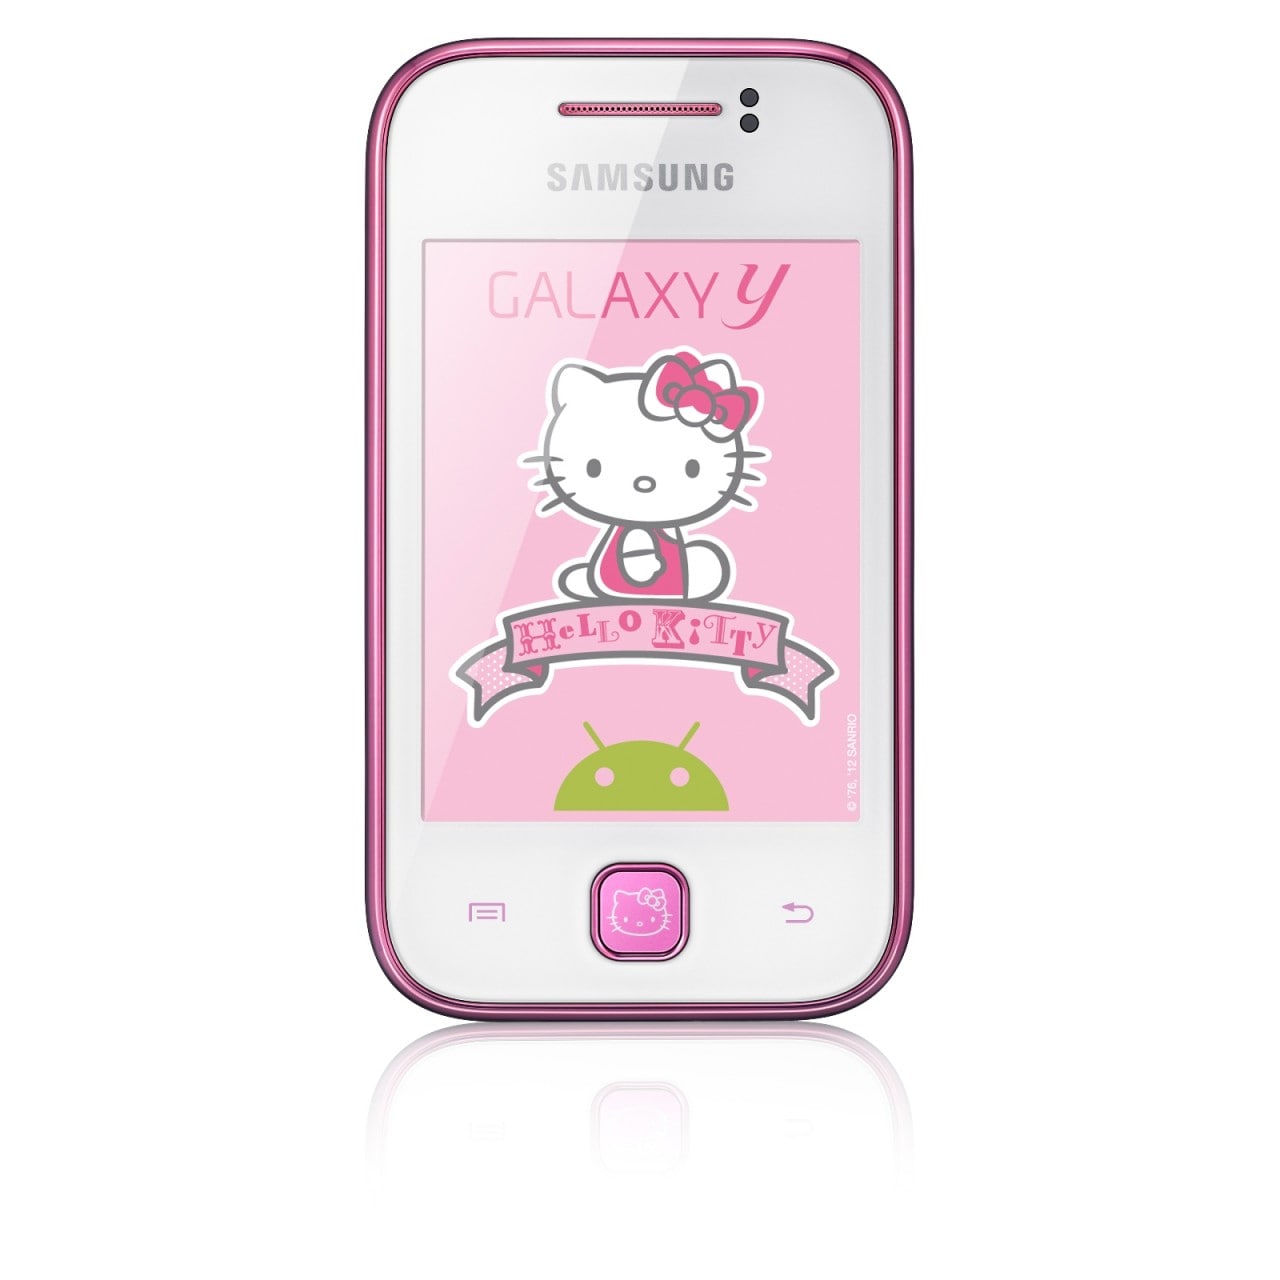 Samsung Galaxy Y arriva anche in versione Hello Kitty